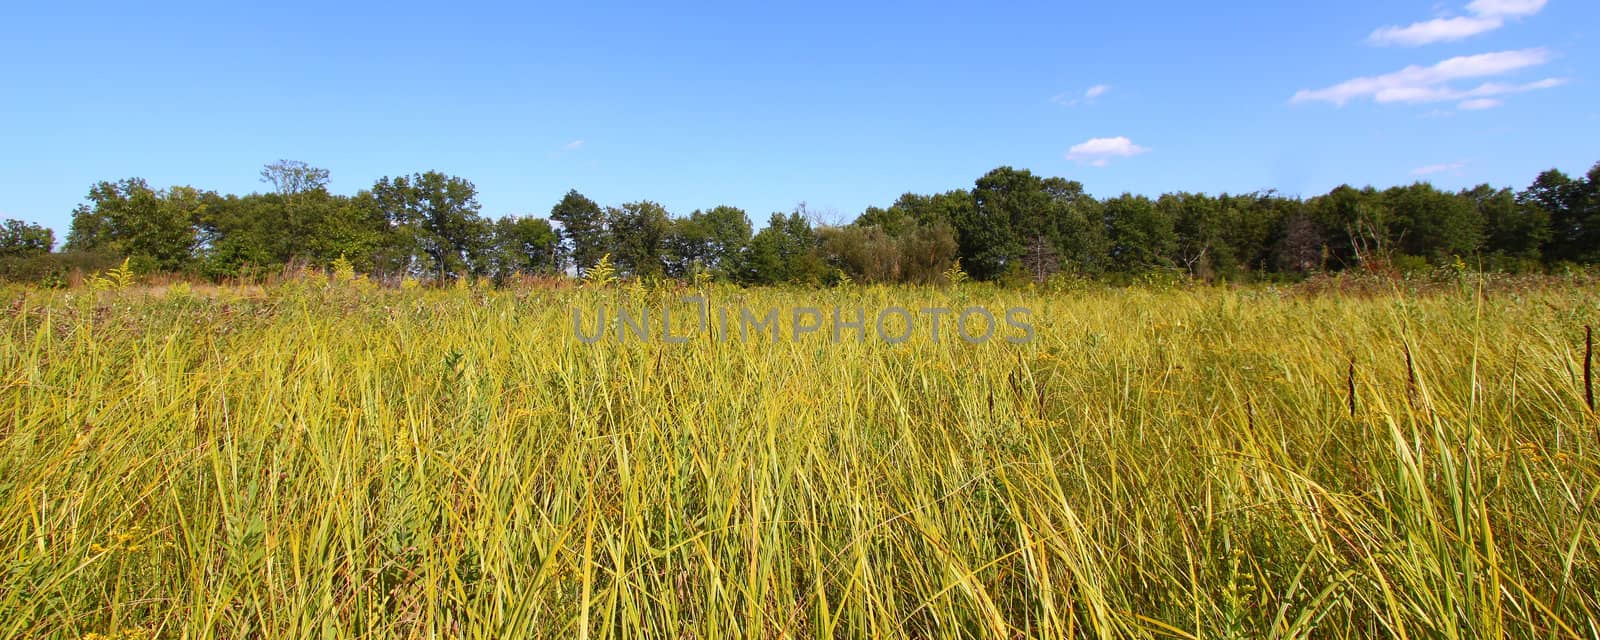 Nachusa Grasslands - Illinois by Wirepec